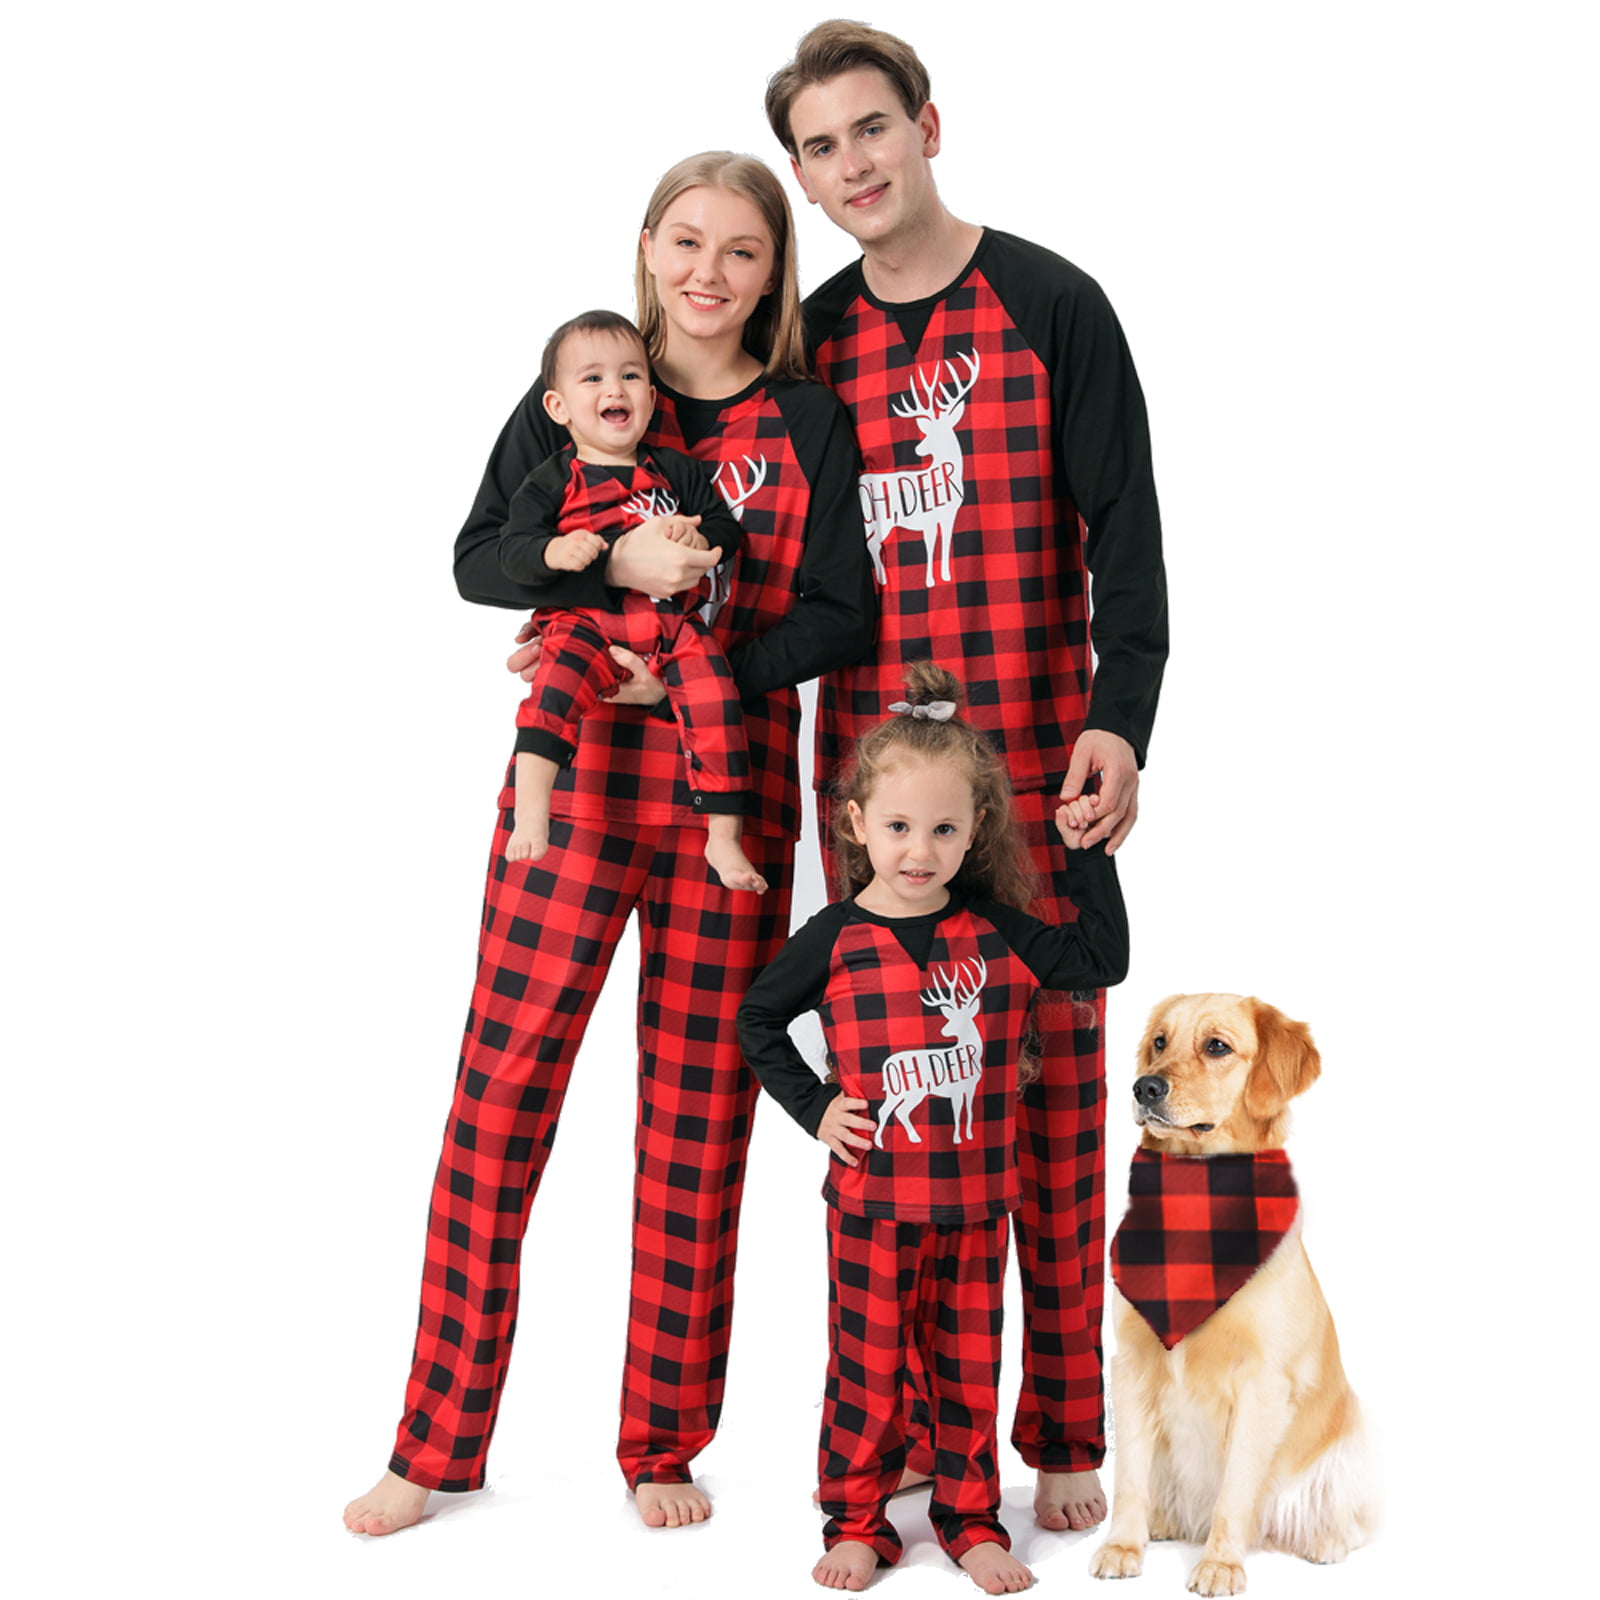 Merry Matching Pajamas Christmas Pajamas for Family Women Men Kids Baby Pjs Red Plaid Reindeer Loungewear Sleepwear Homewear 